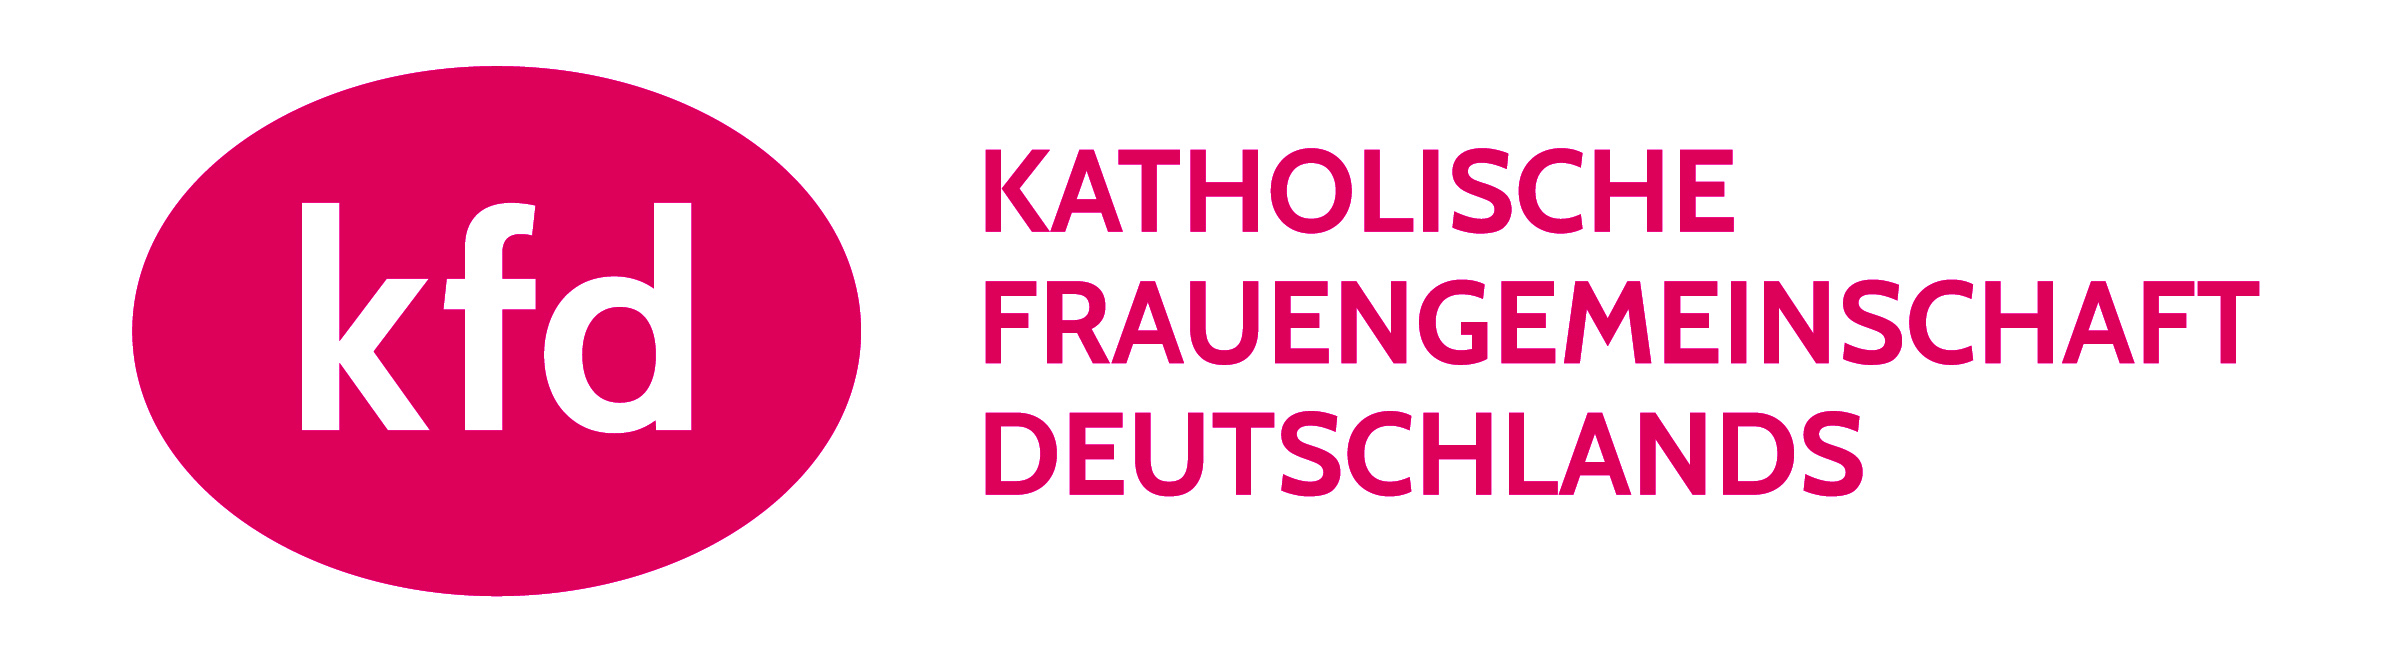 kfd Logo